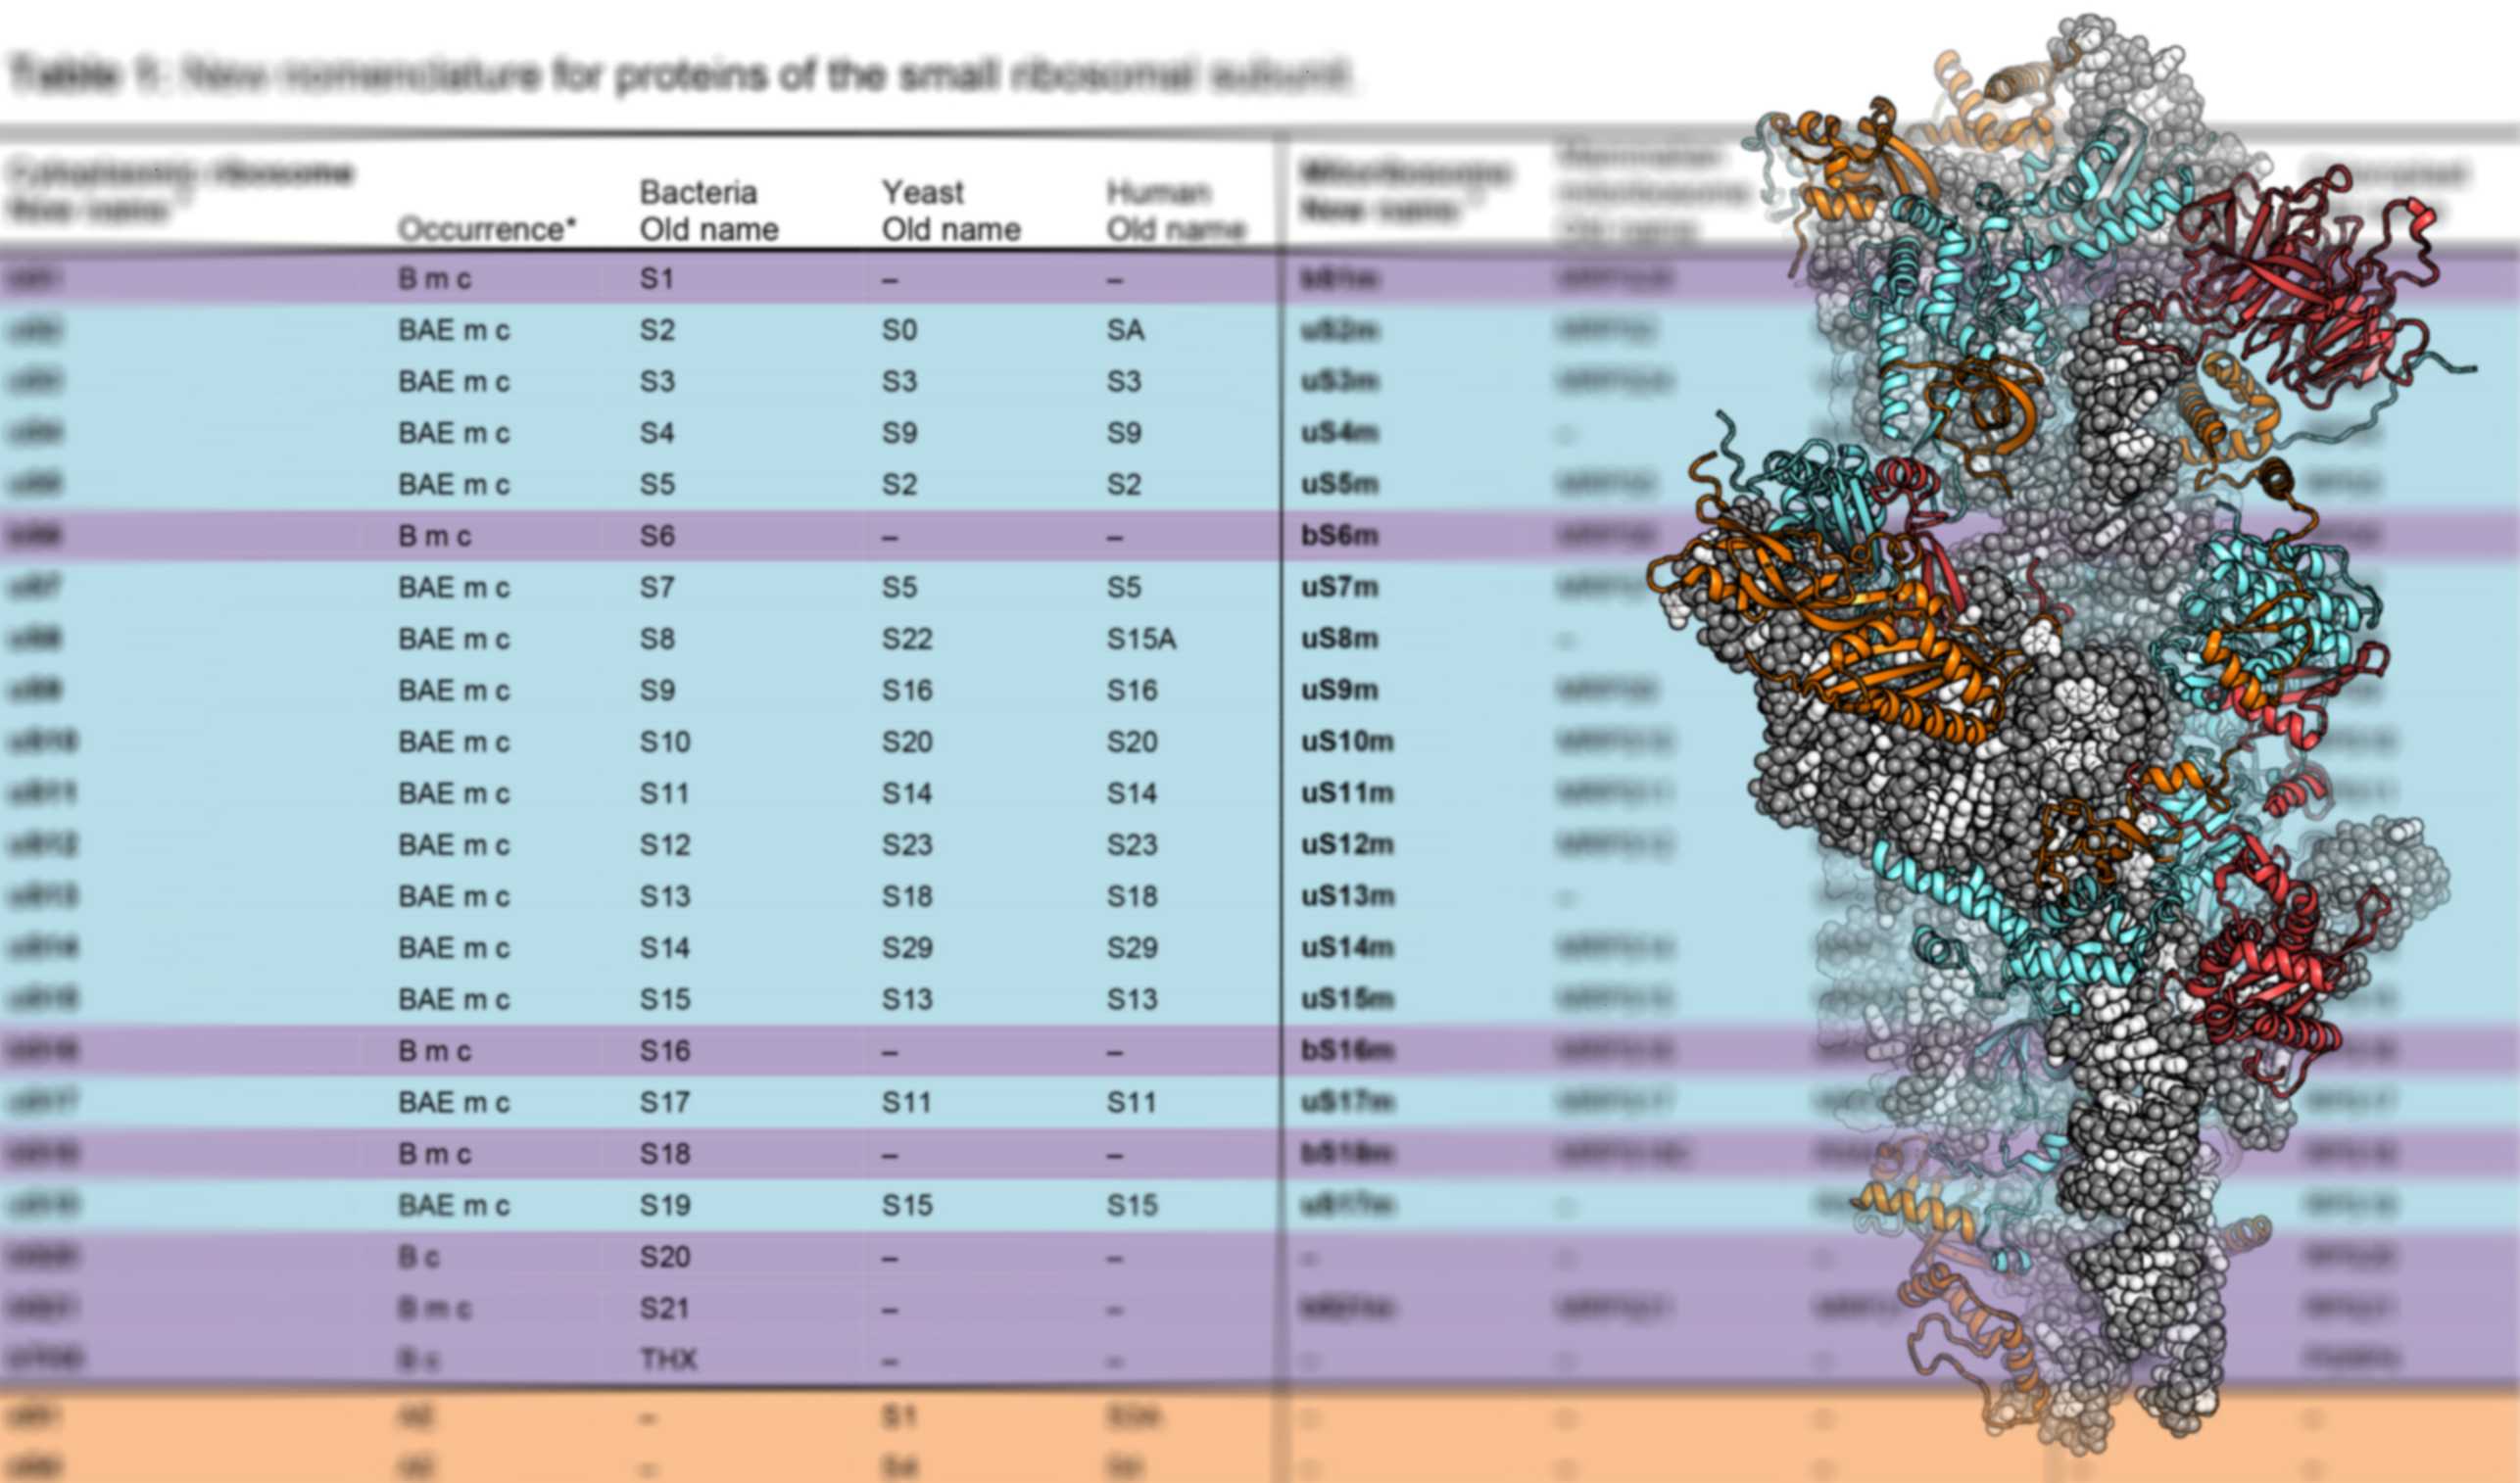 Nomenclature of Ribosomal Proteins